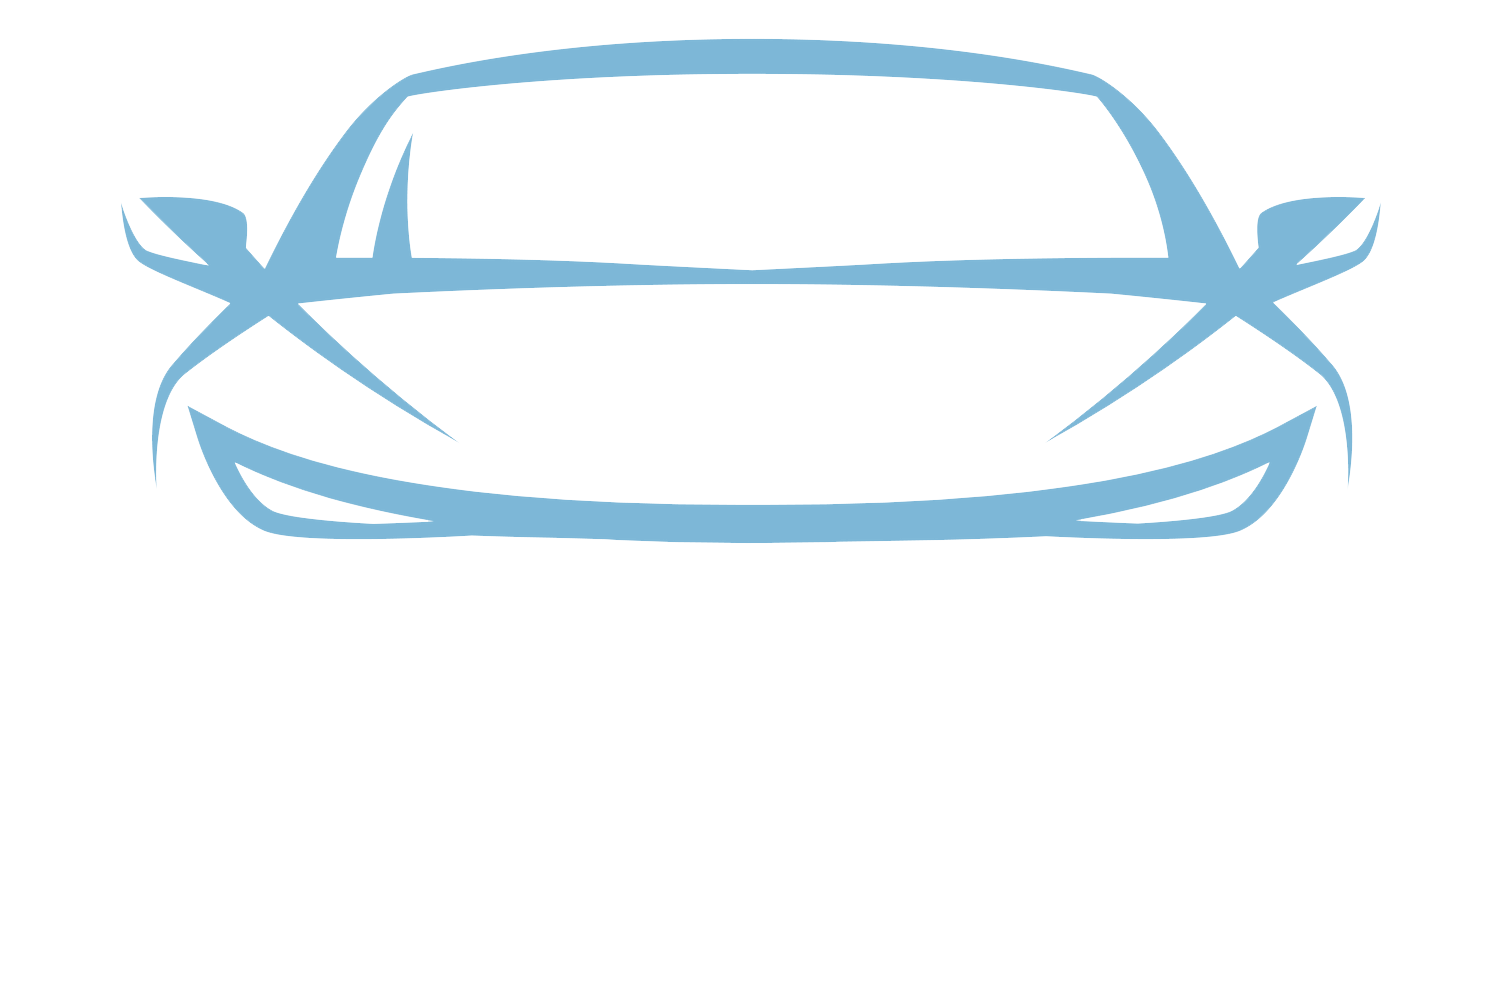 LD Parts Service logo